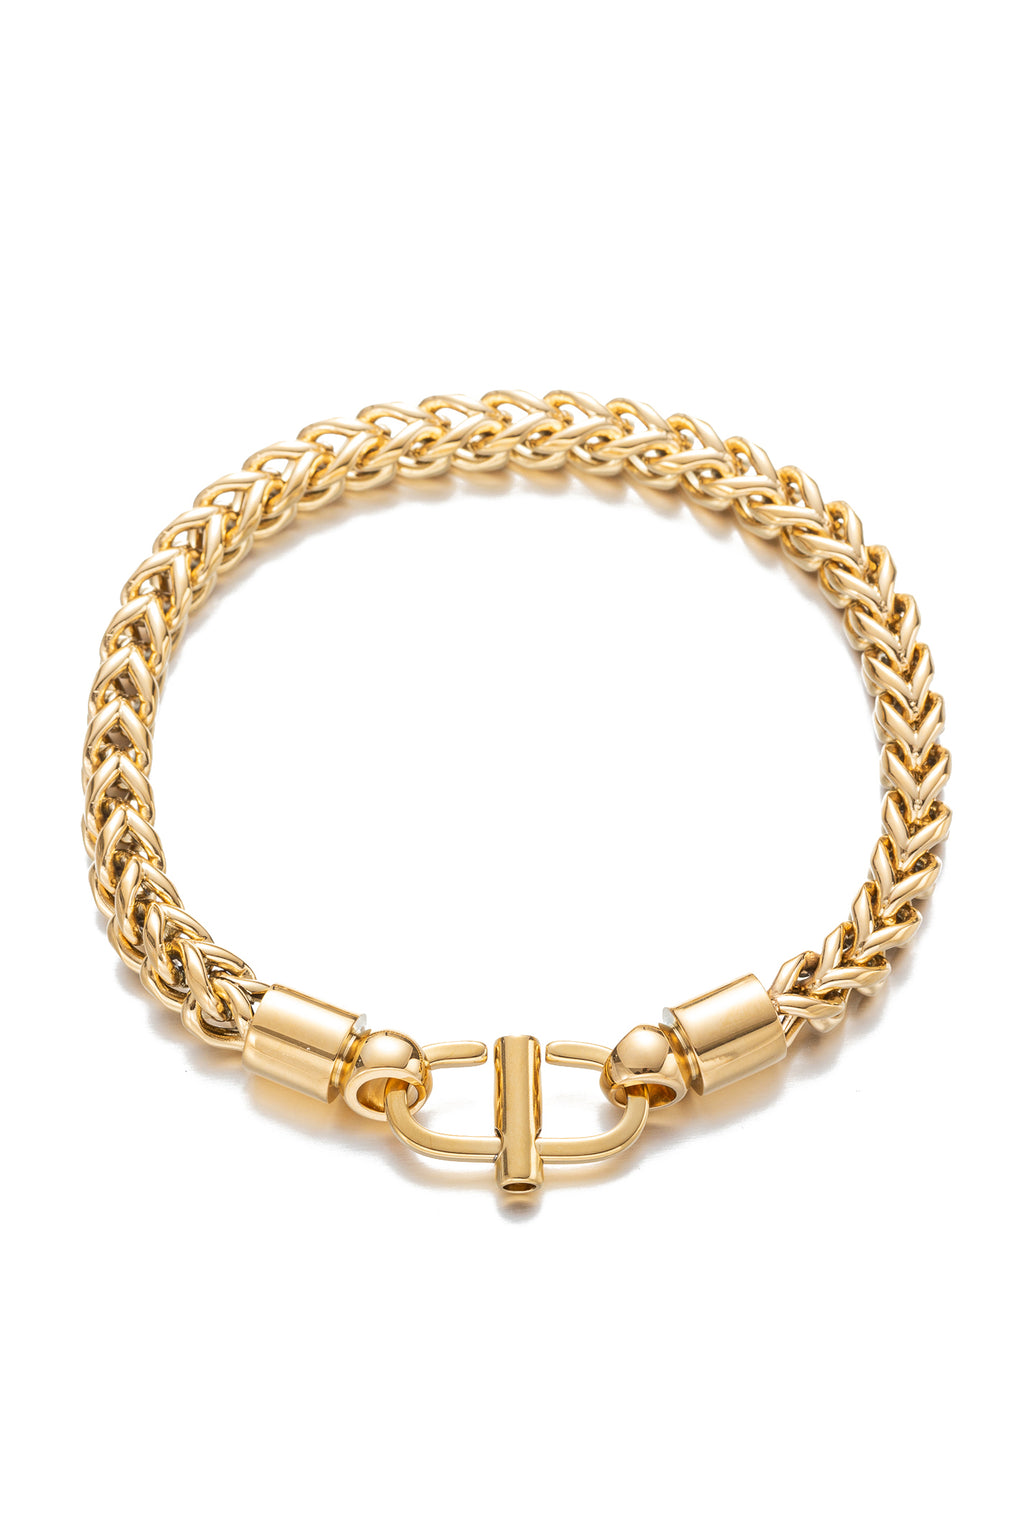 18k gold plated titanium chain link bracelet.